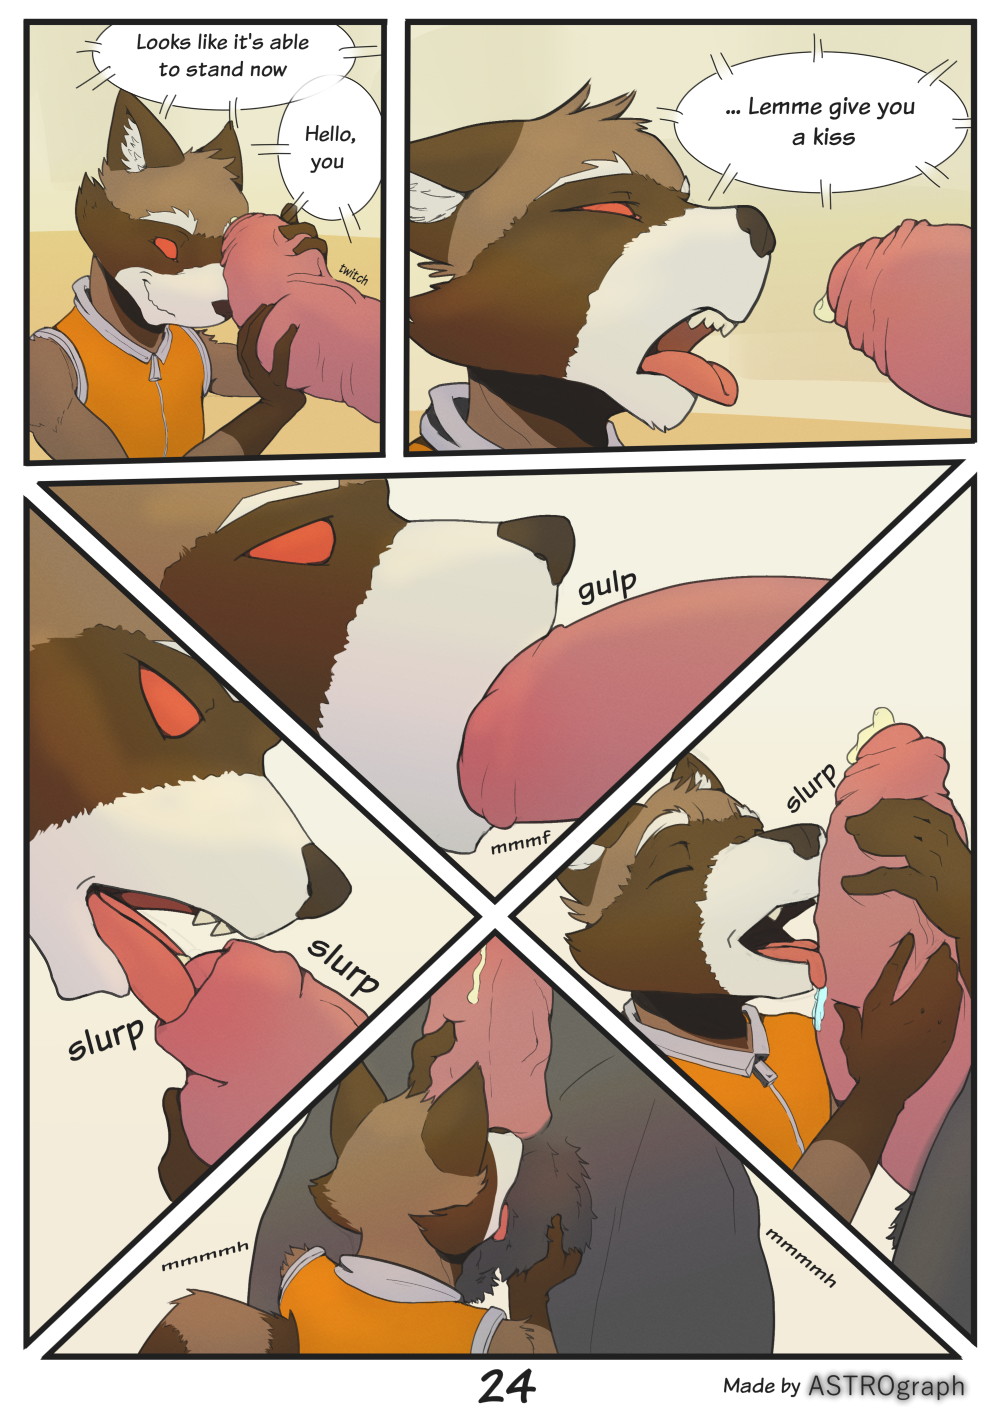 Rocket Raccoon Gay Furry Porn Comic - 2388556 - e621